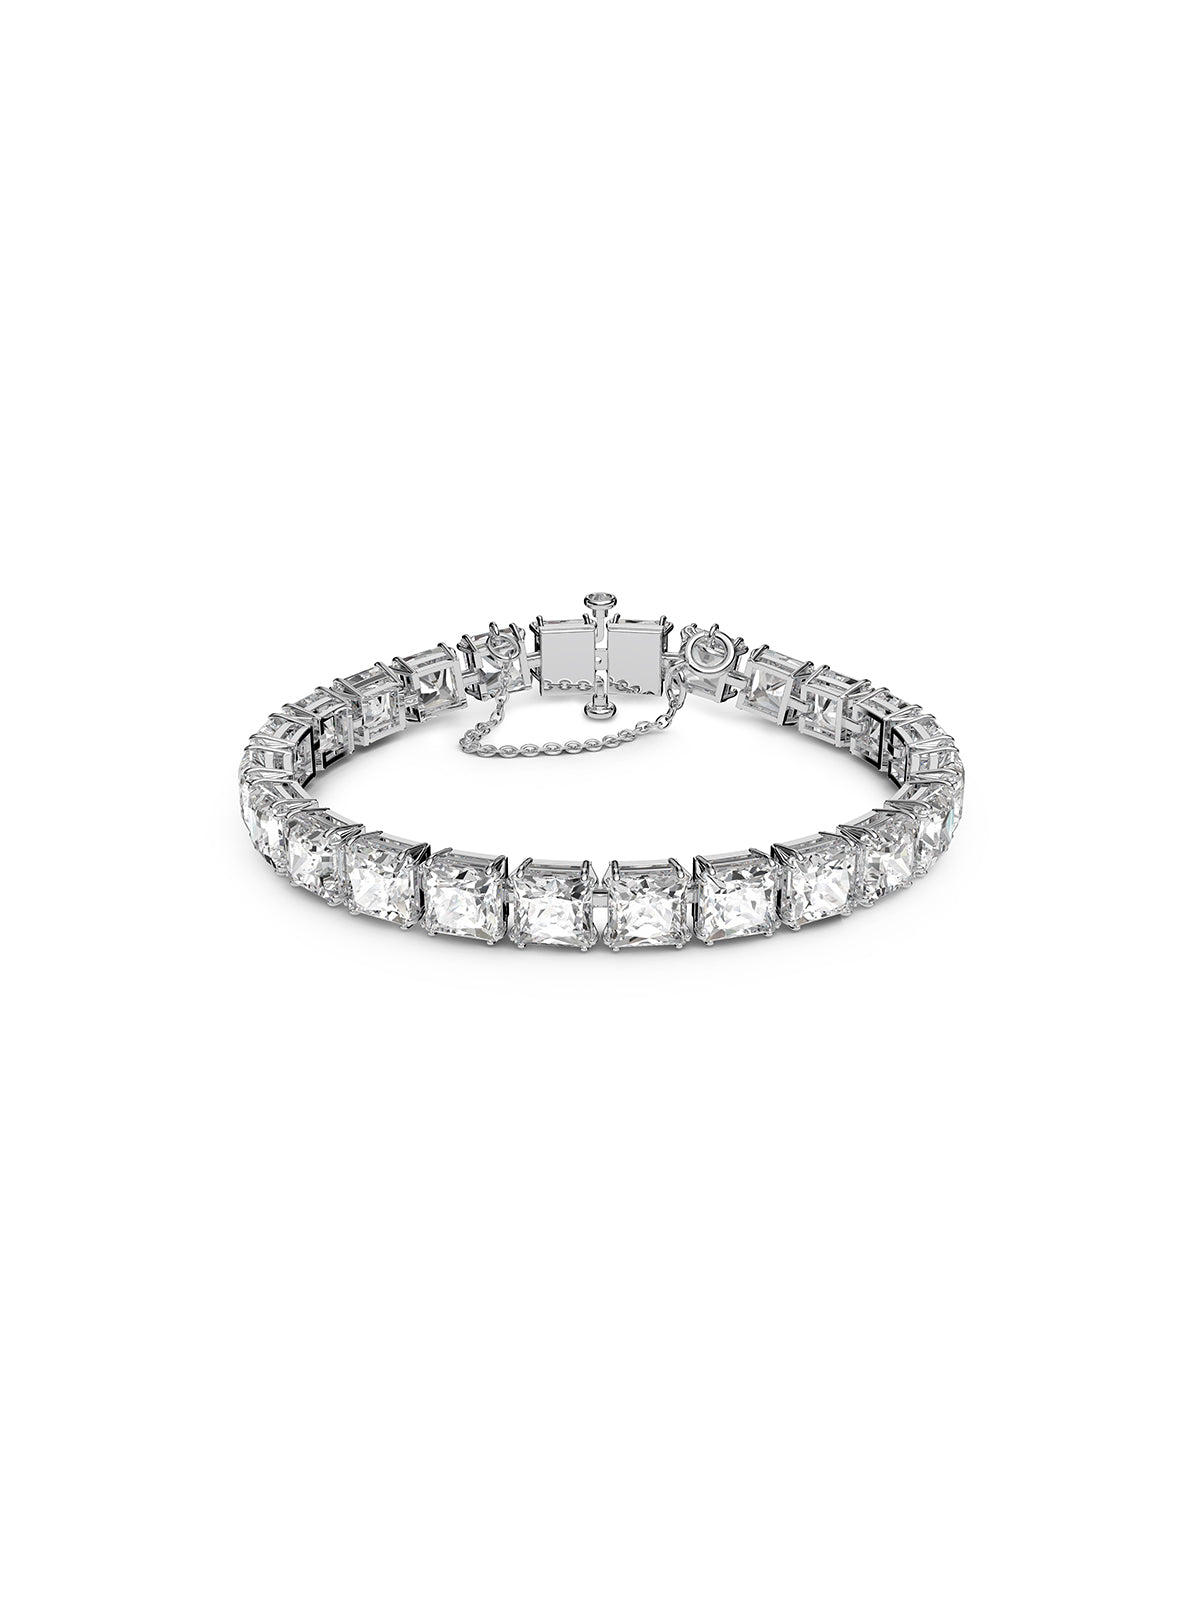 Swarovski Millenia White Crystal Bracelet 5599202